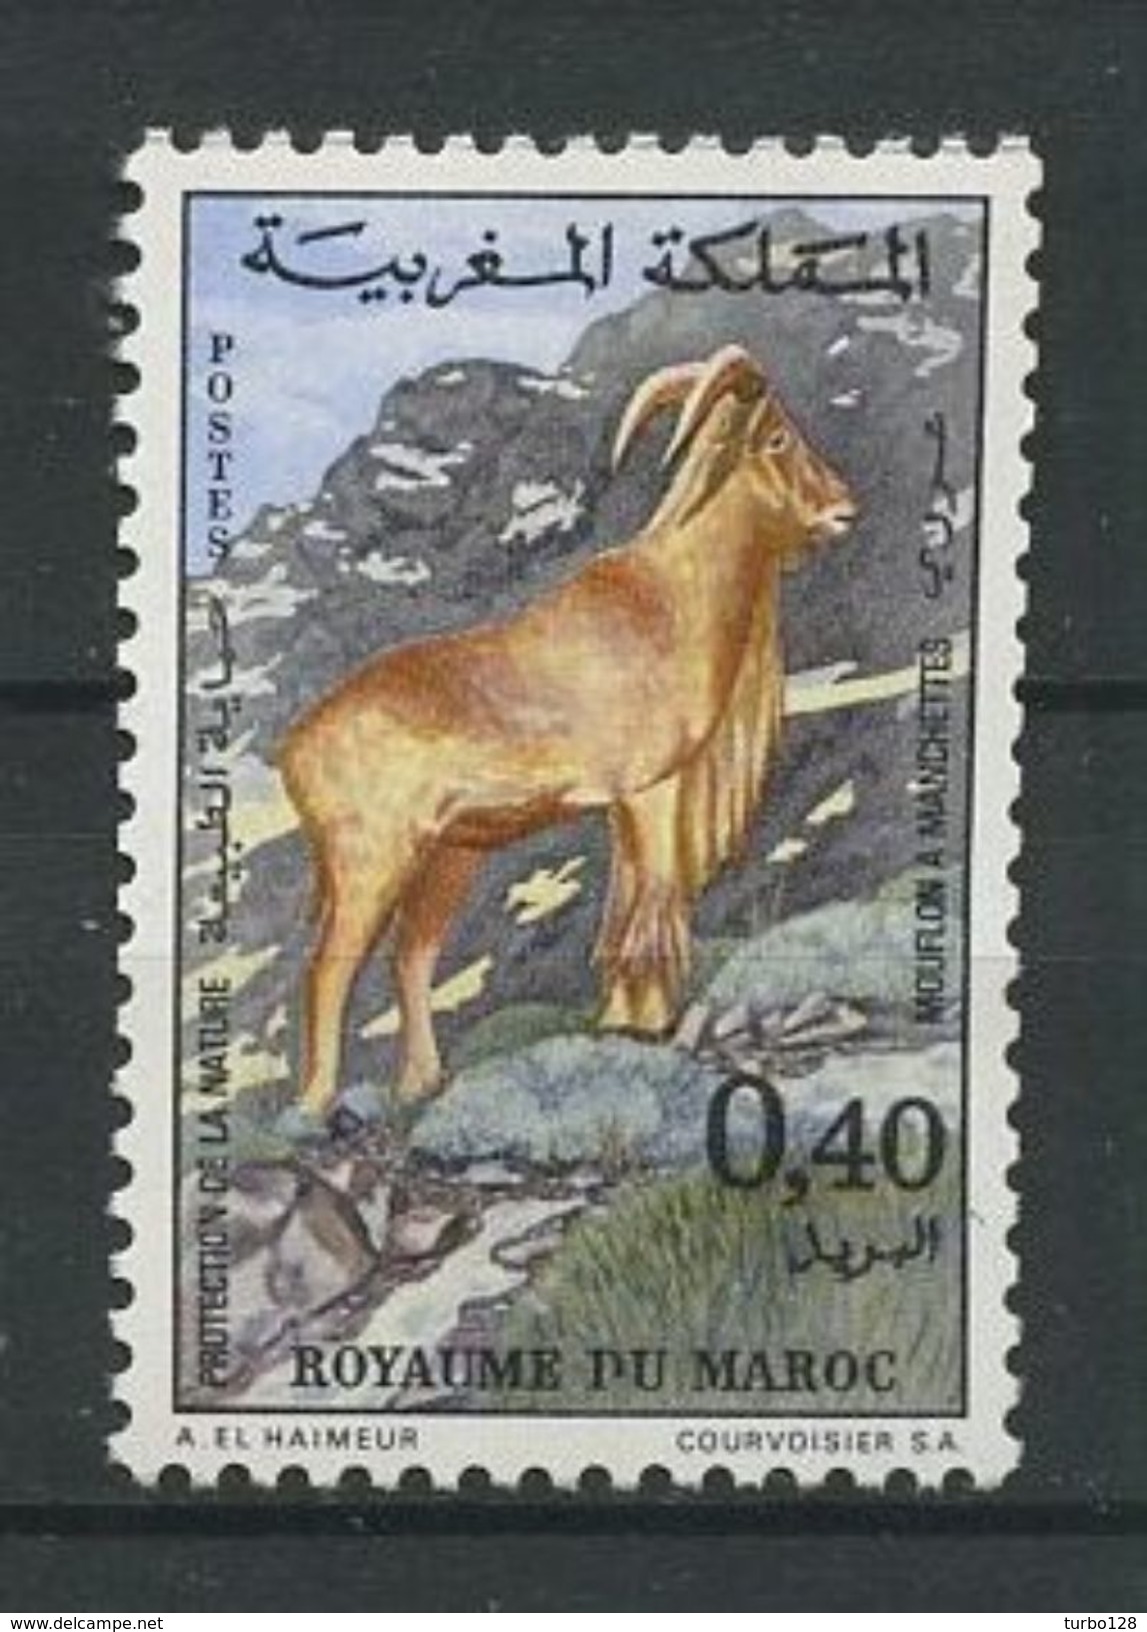 MAROC 1972 N° 647 ** Neuf MNH Superbe Cote 2,80 € Faune Animaux Mouflon à Manchettes Protection Nature - Morocco (1956-...)